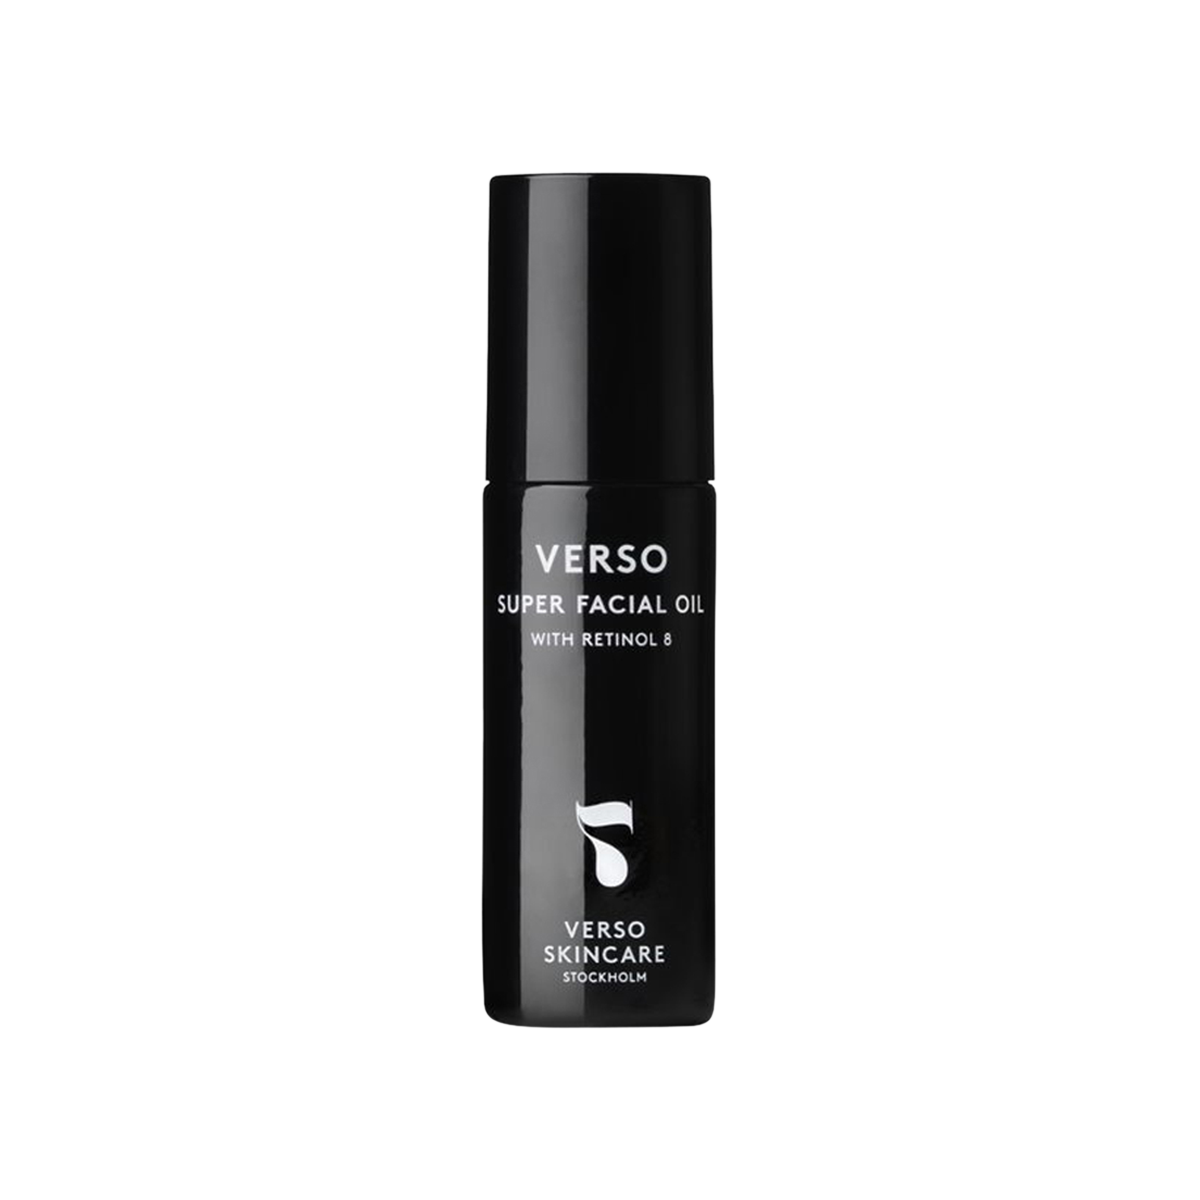 Verso - Super Facial Oil with Retinol 8